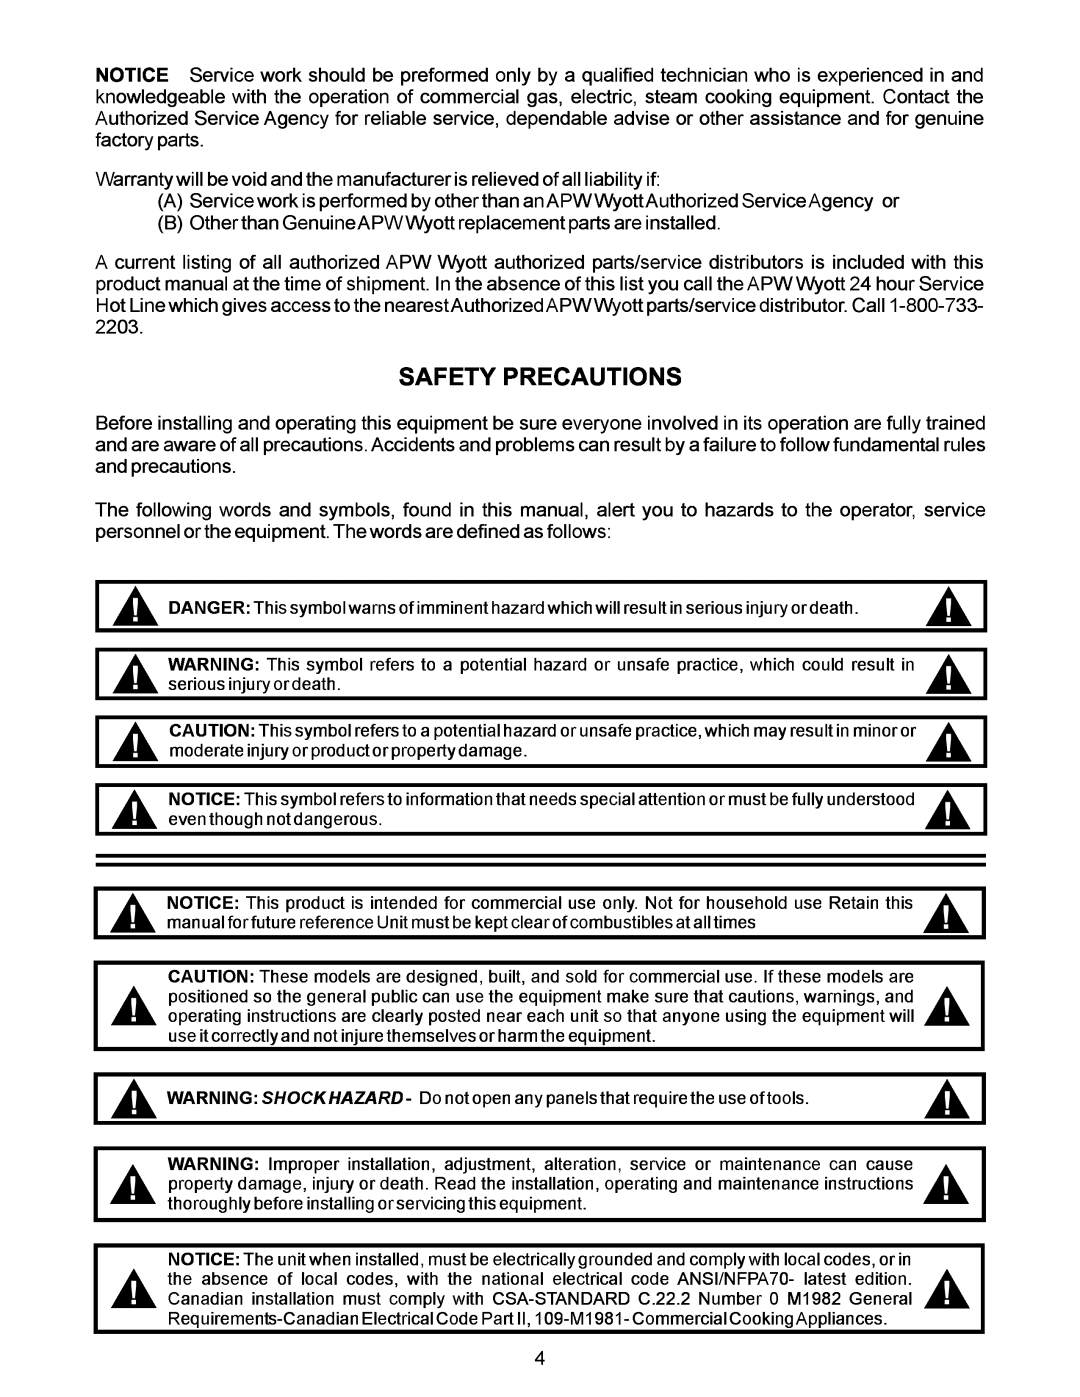 APW Wyott SEHP manual Safety Precautions 